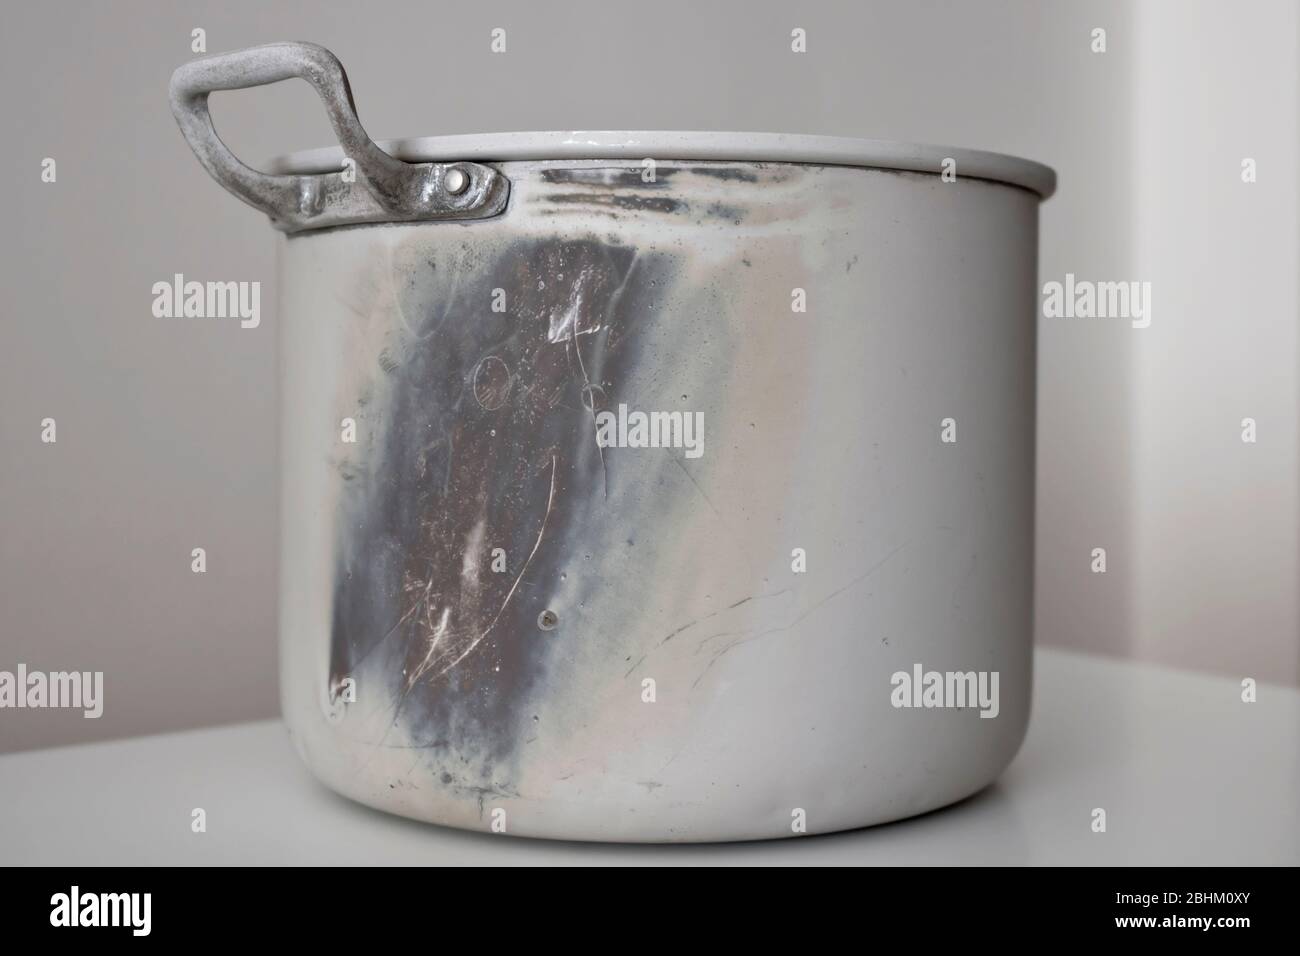 Aluminum big pot hi-res stock photography and images - Alamy